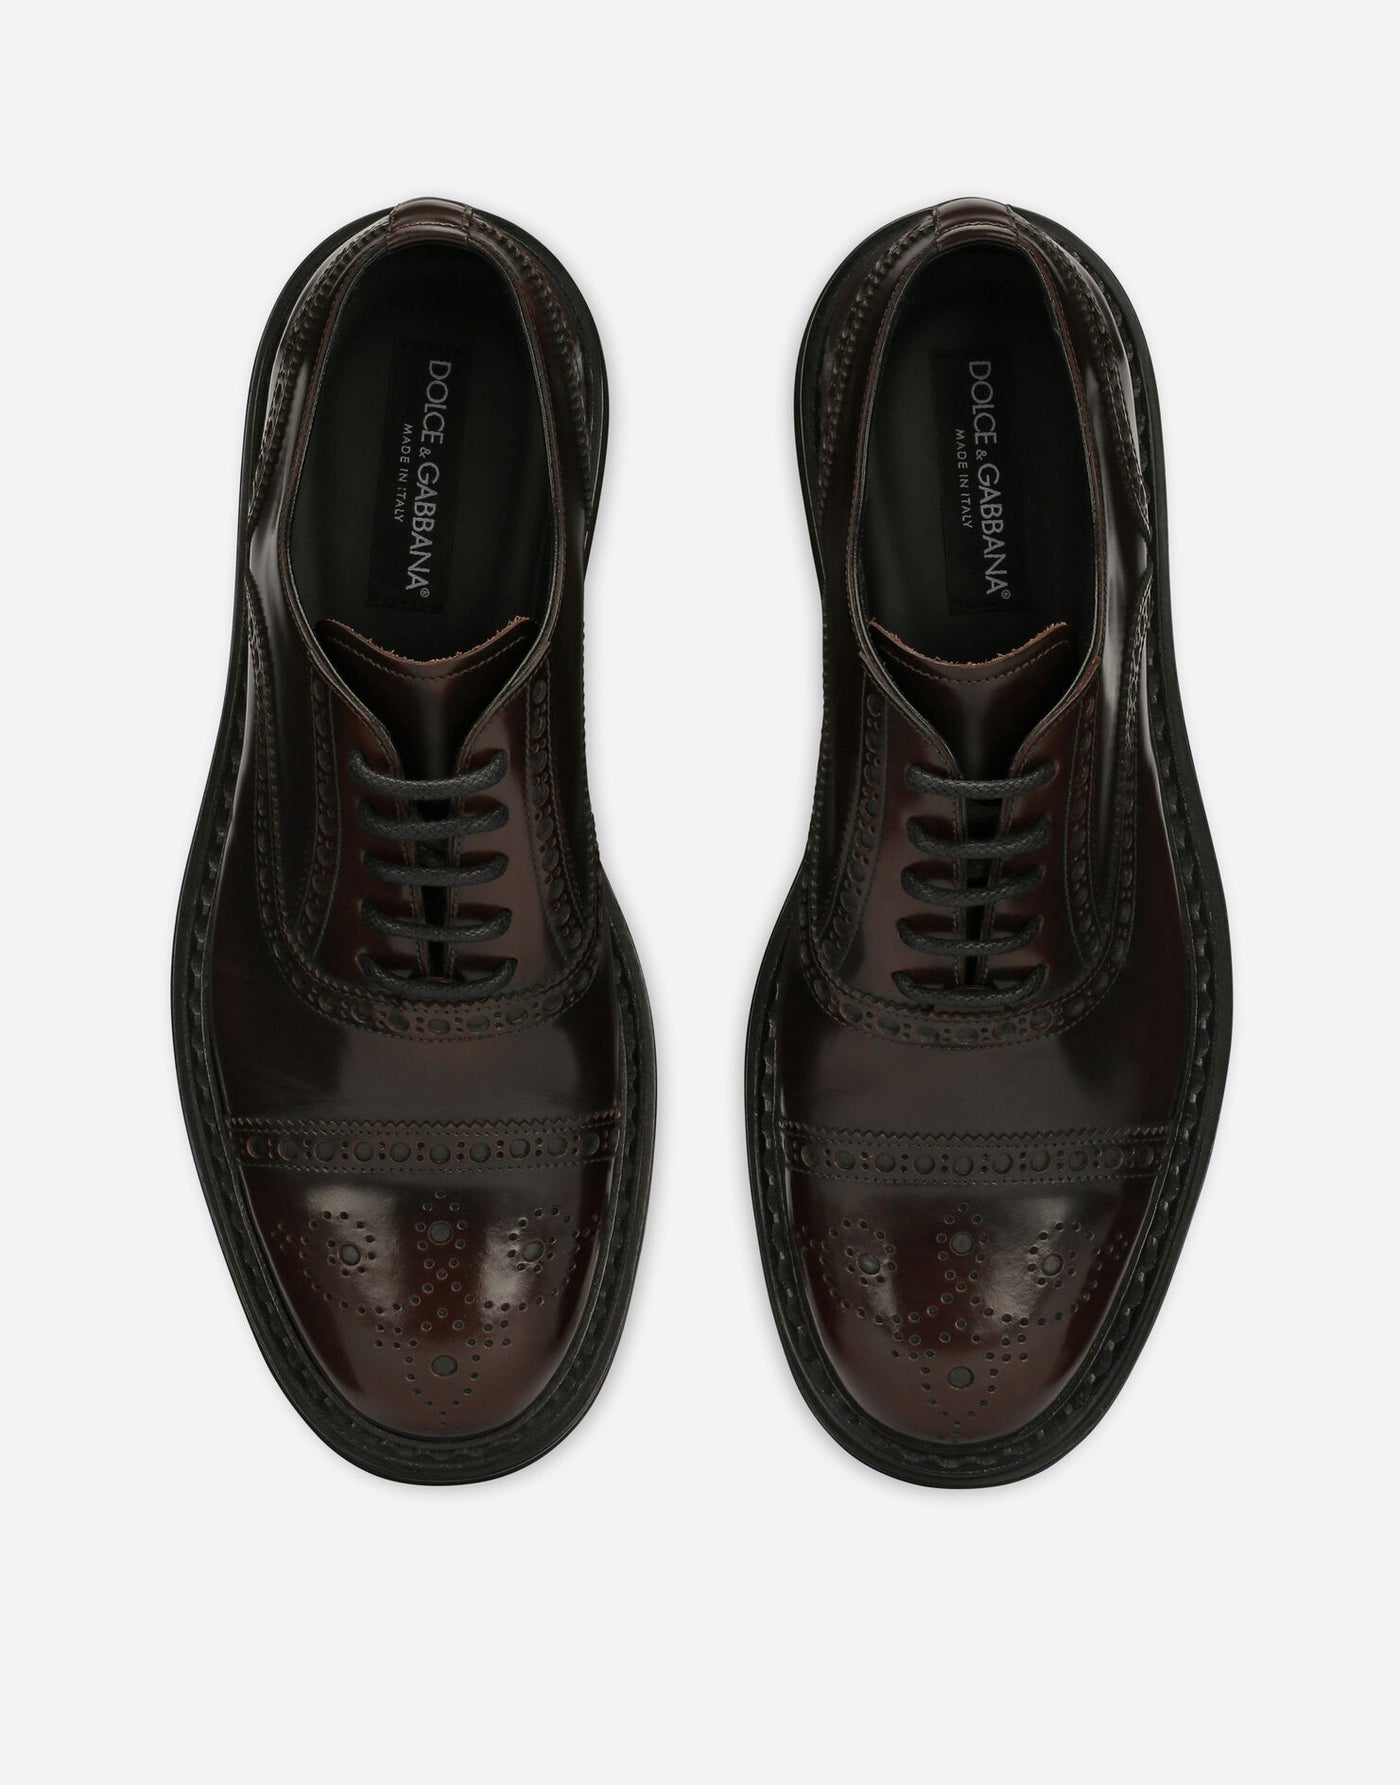 Dolce & Gabbana Brushed Calfskin Oxford shoes